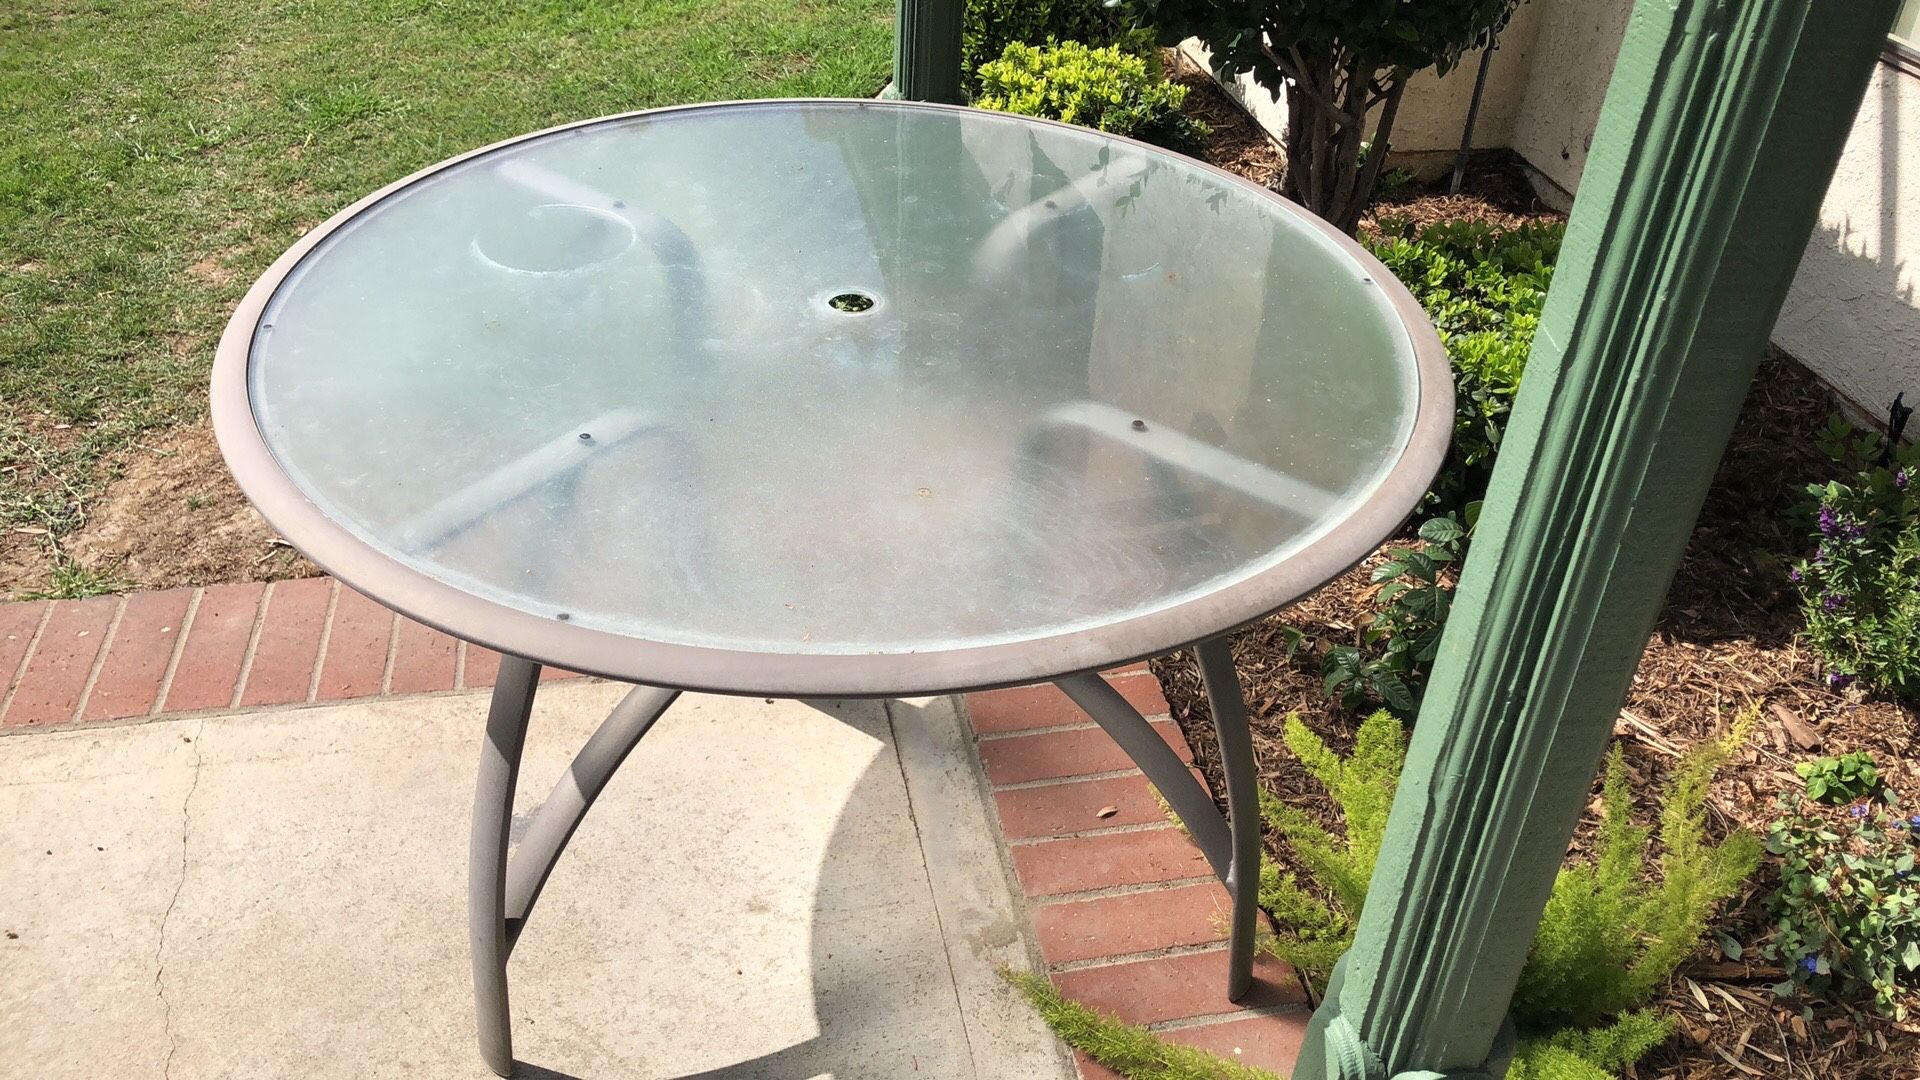 48” patio table